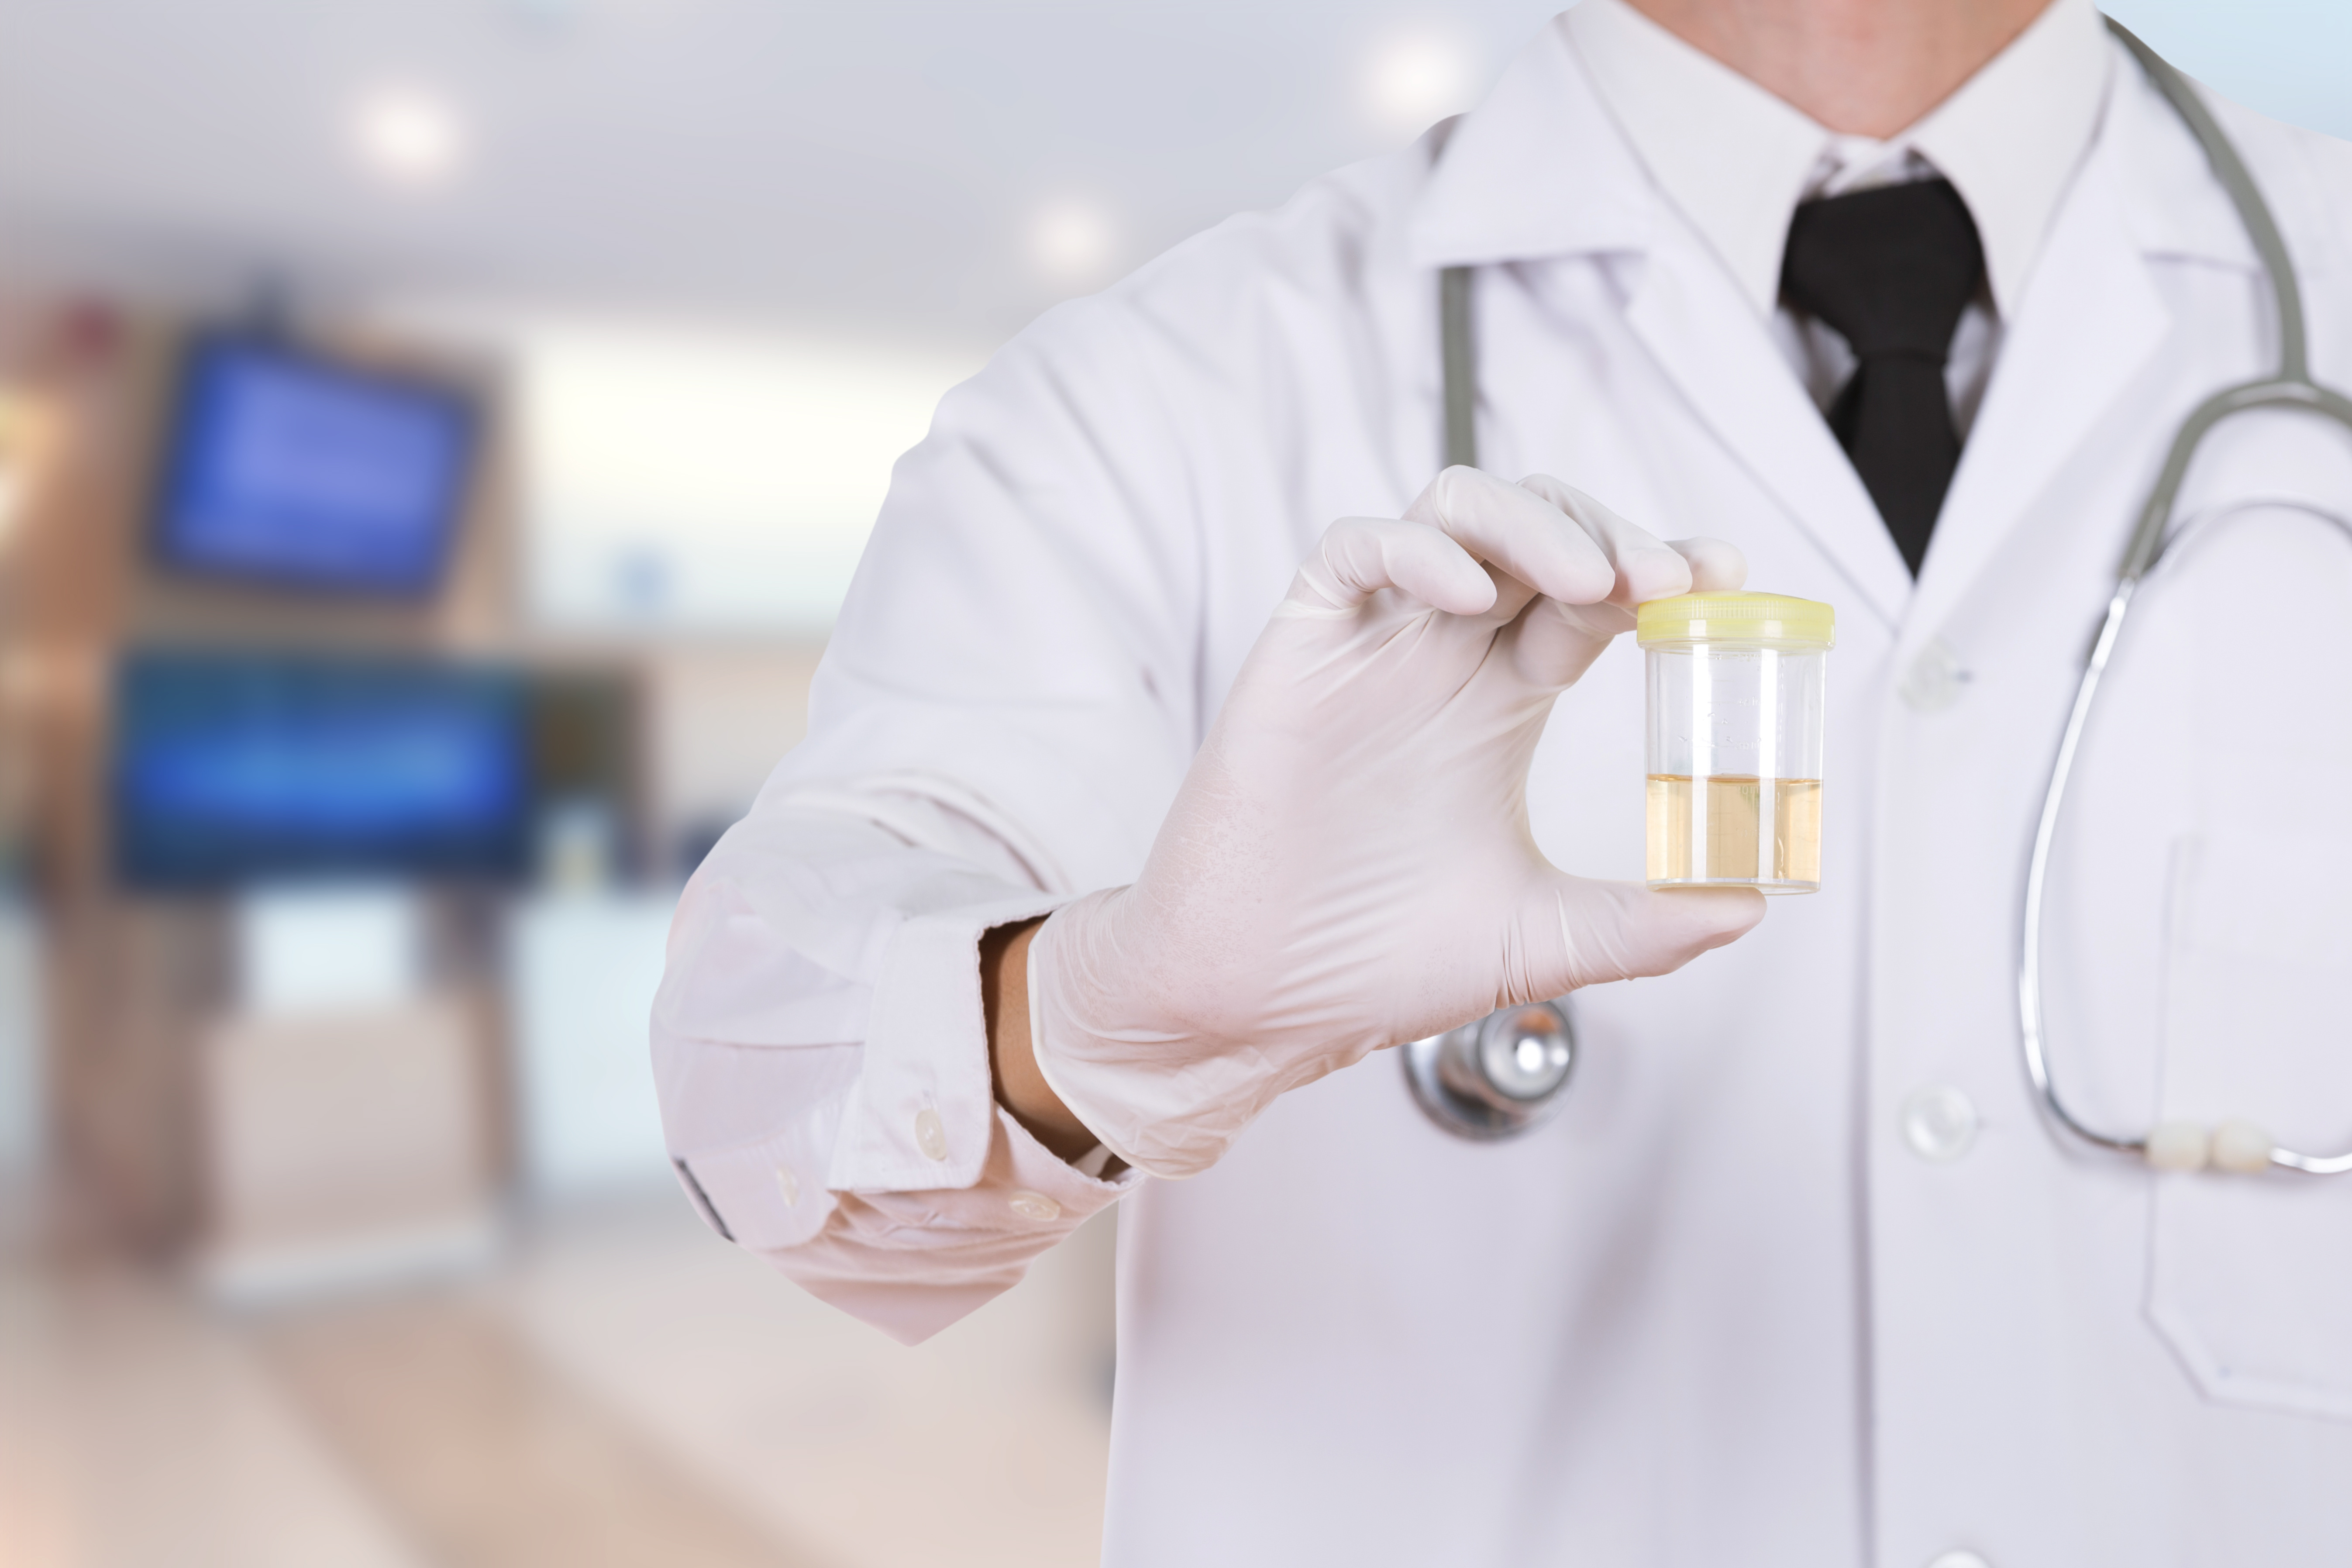 urine drug test, drug testing for employers, employee screening, drug screening for employers